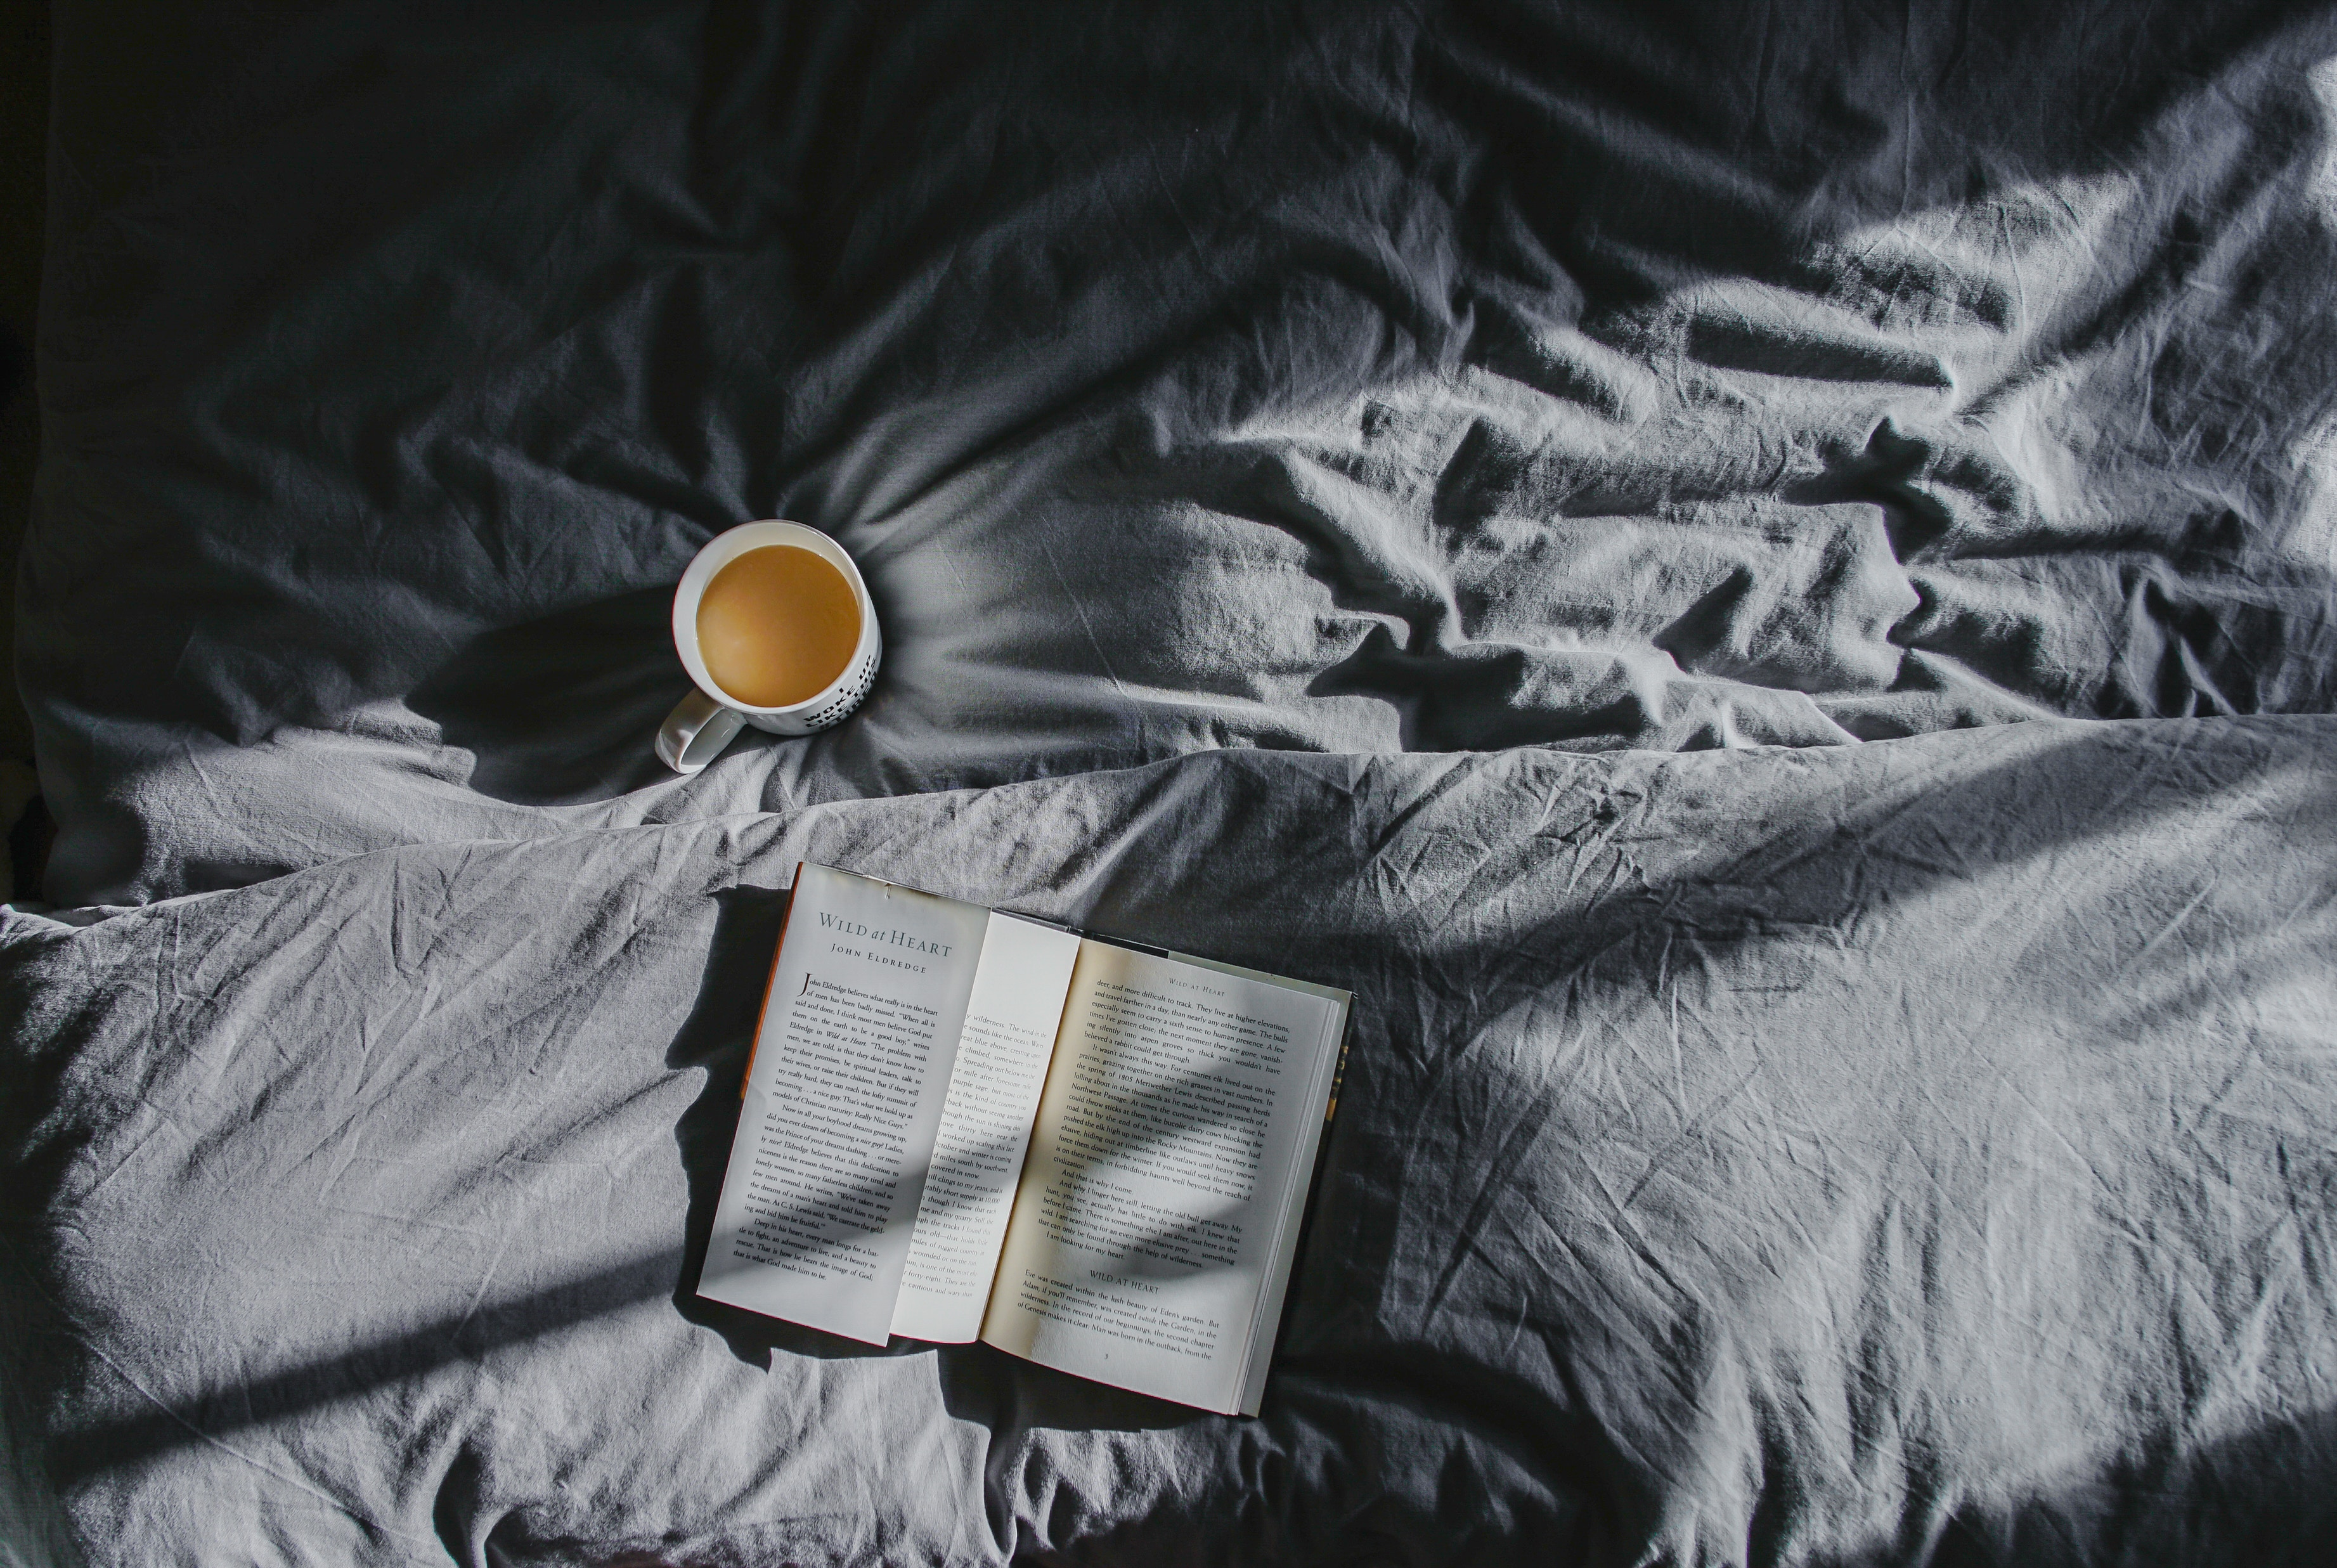 coffee, miscellaneous, miscellanea, shadow, book, bed 1080p